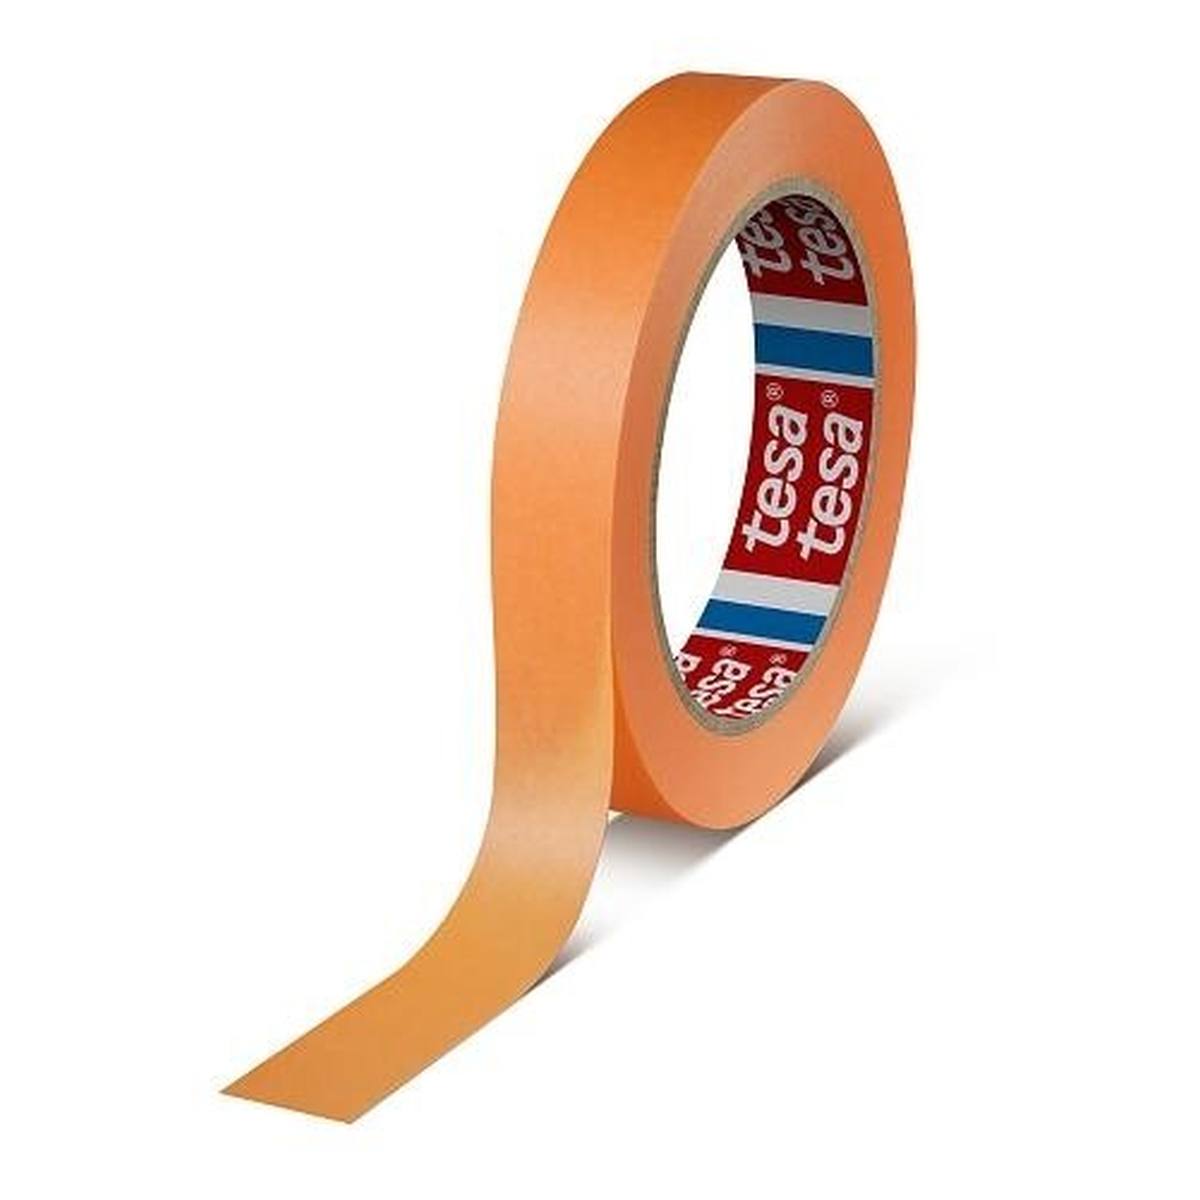 Tesakrepp 4342 Precision crepe washi tape 19mmx50m orange